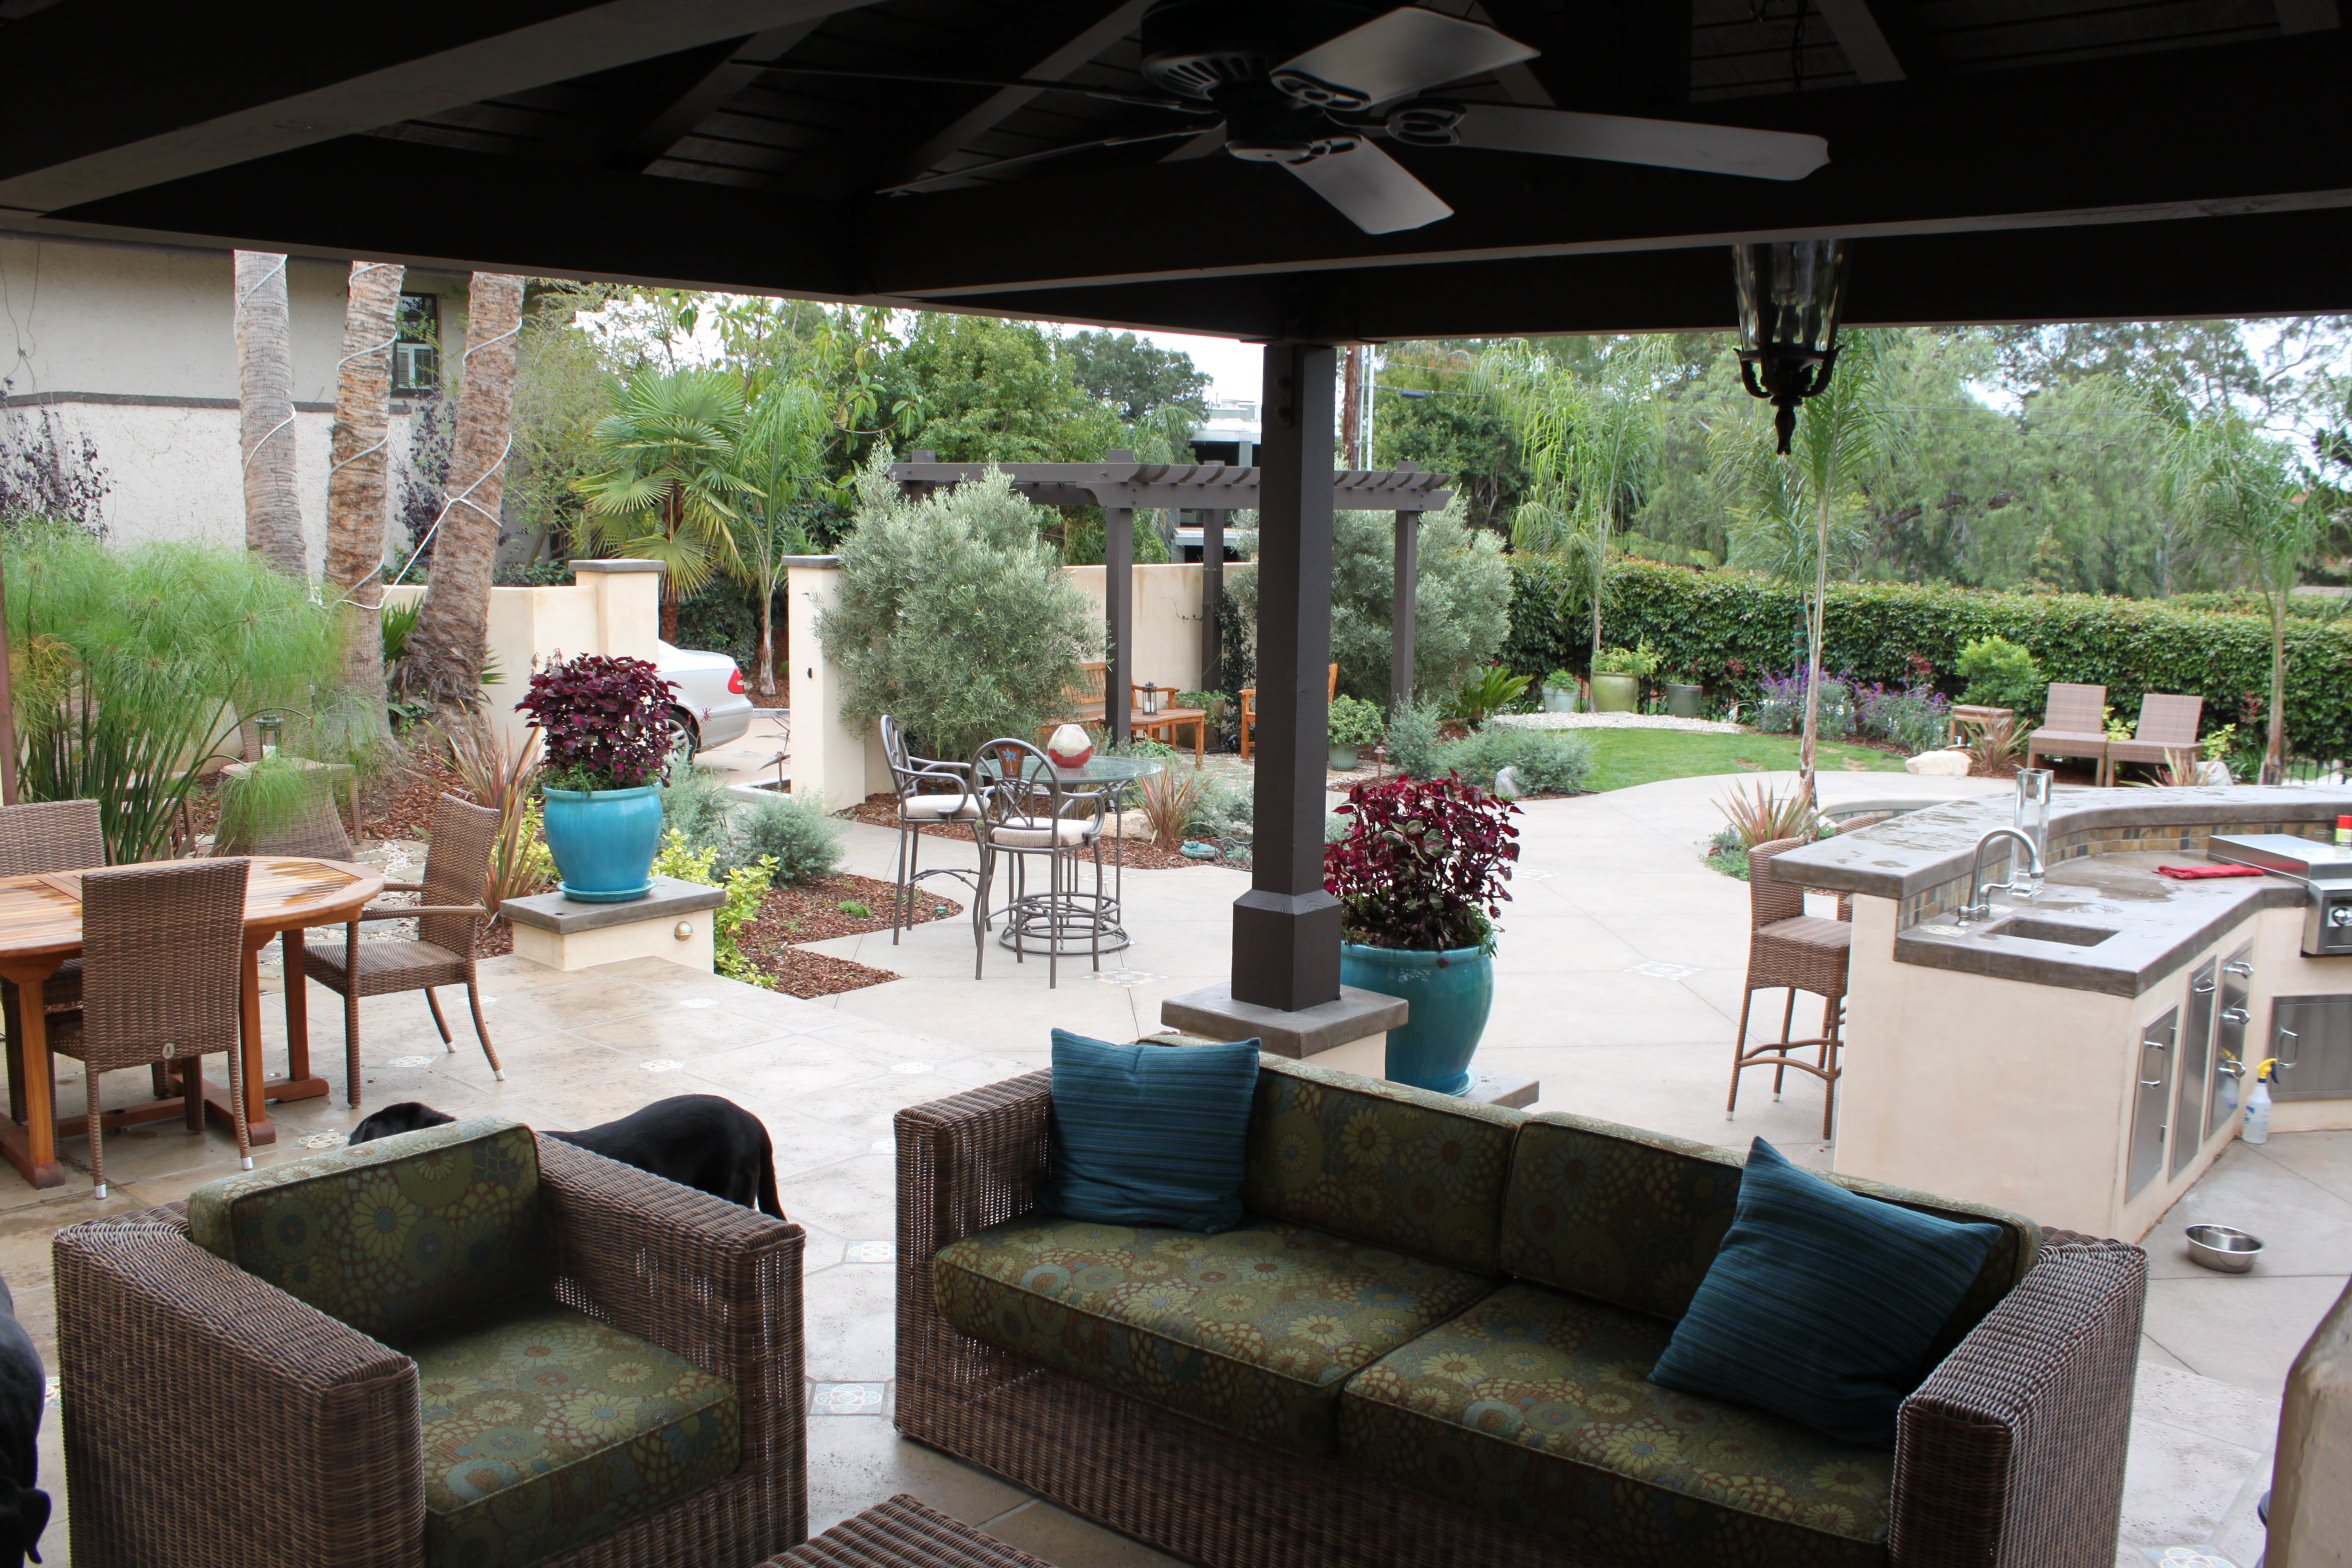 Cabana and Fireplace Lounge Area Overlooking Backyard